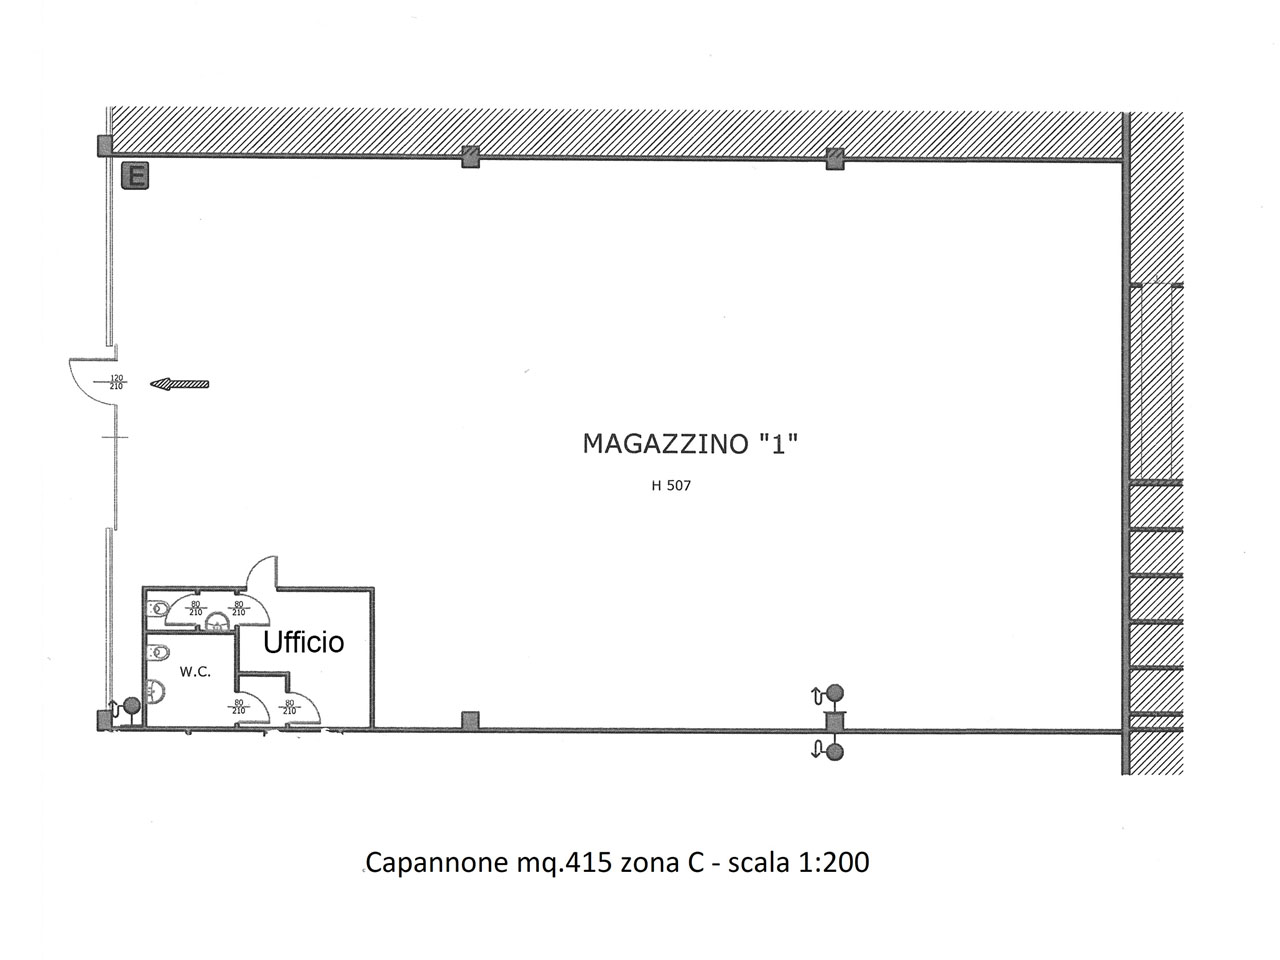 Floorplan - Industrial warehouse for rent in Milan - 415 sqm (4467 sqft)-milan-415-sqm-4467-sqft-atlantic-business-center-floorplan